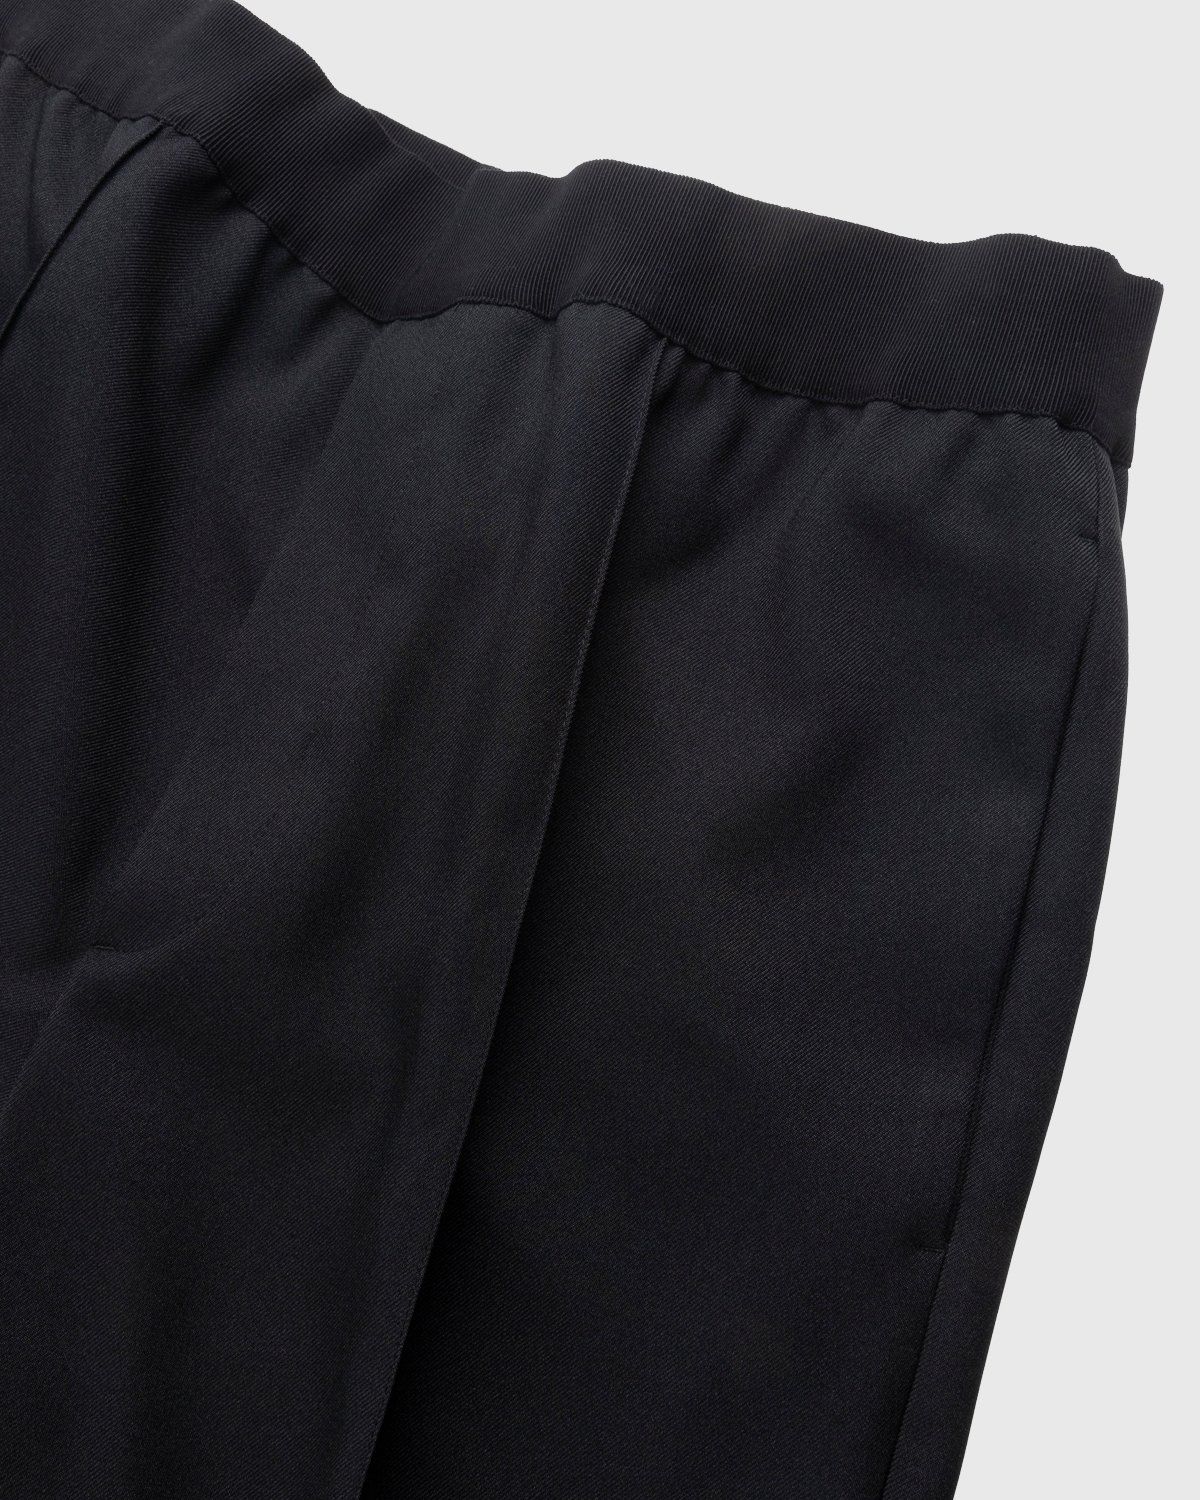 Jil Sander – Polyester Trousers Black - Trousers - Black - Image 4